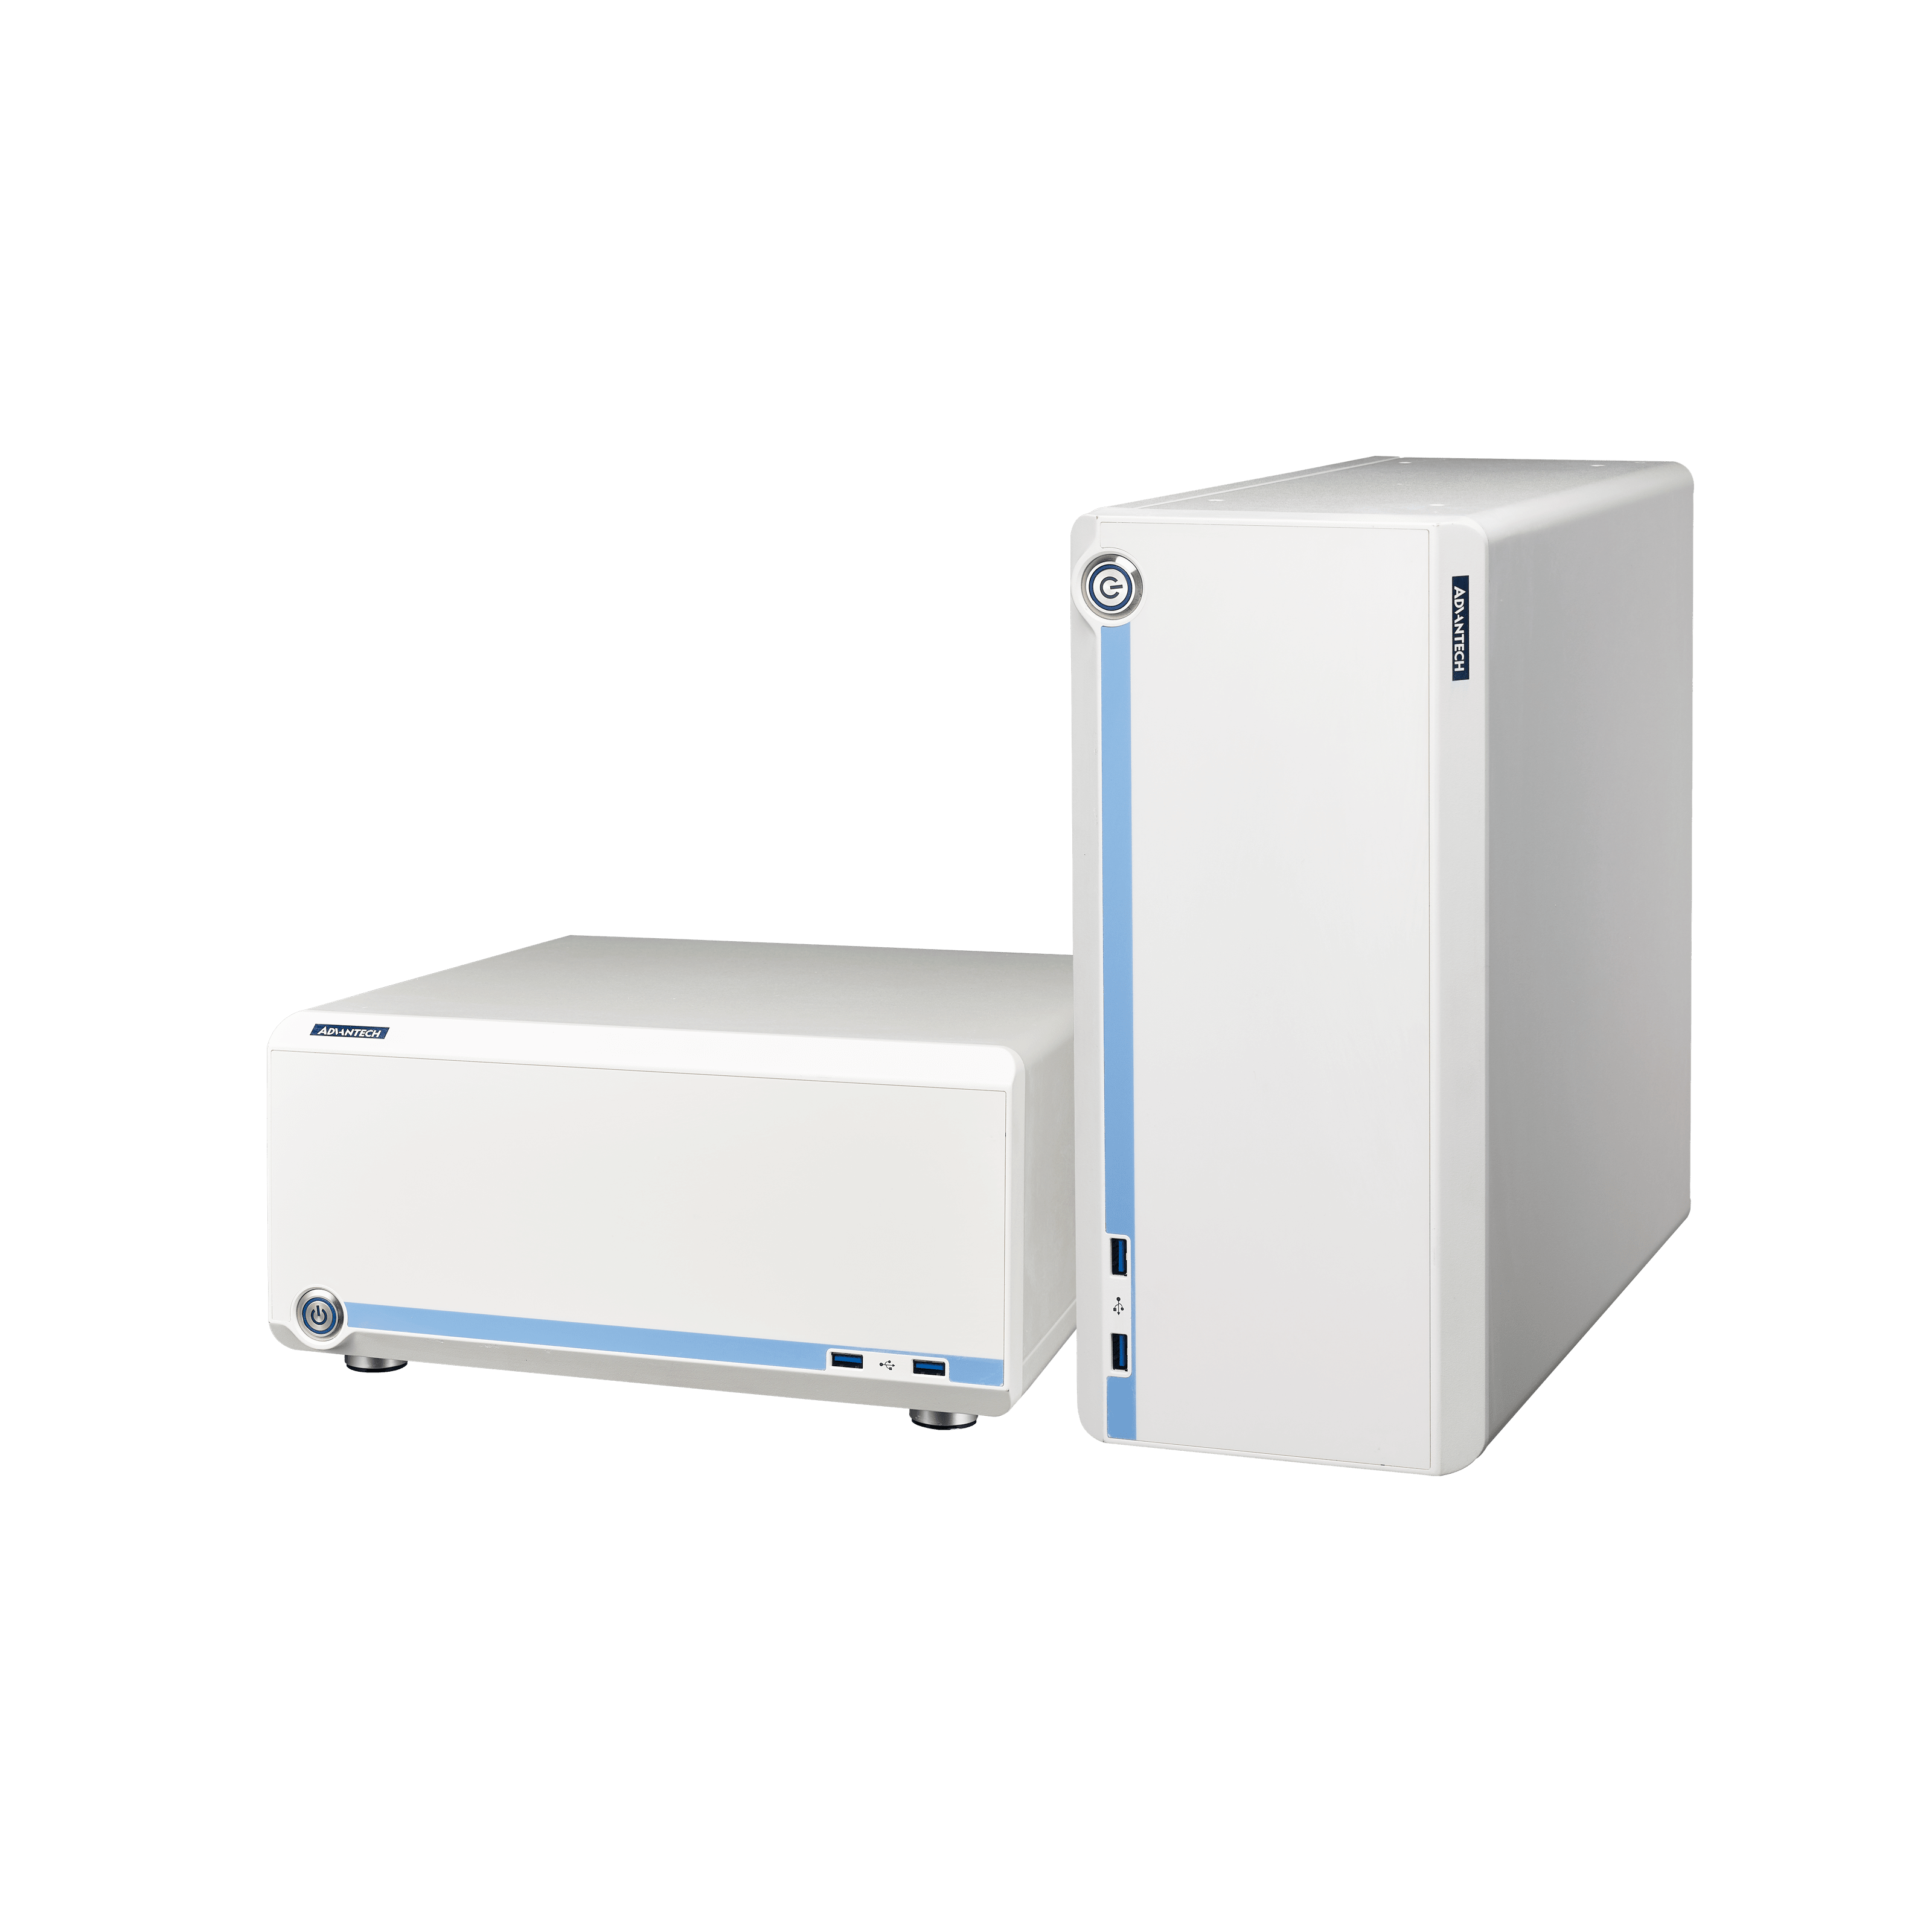 USM-501 Medical box PC